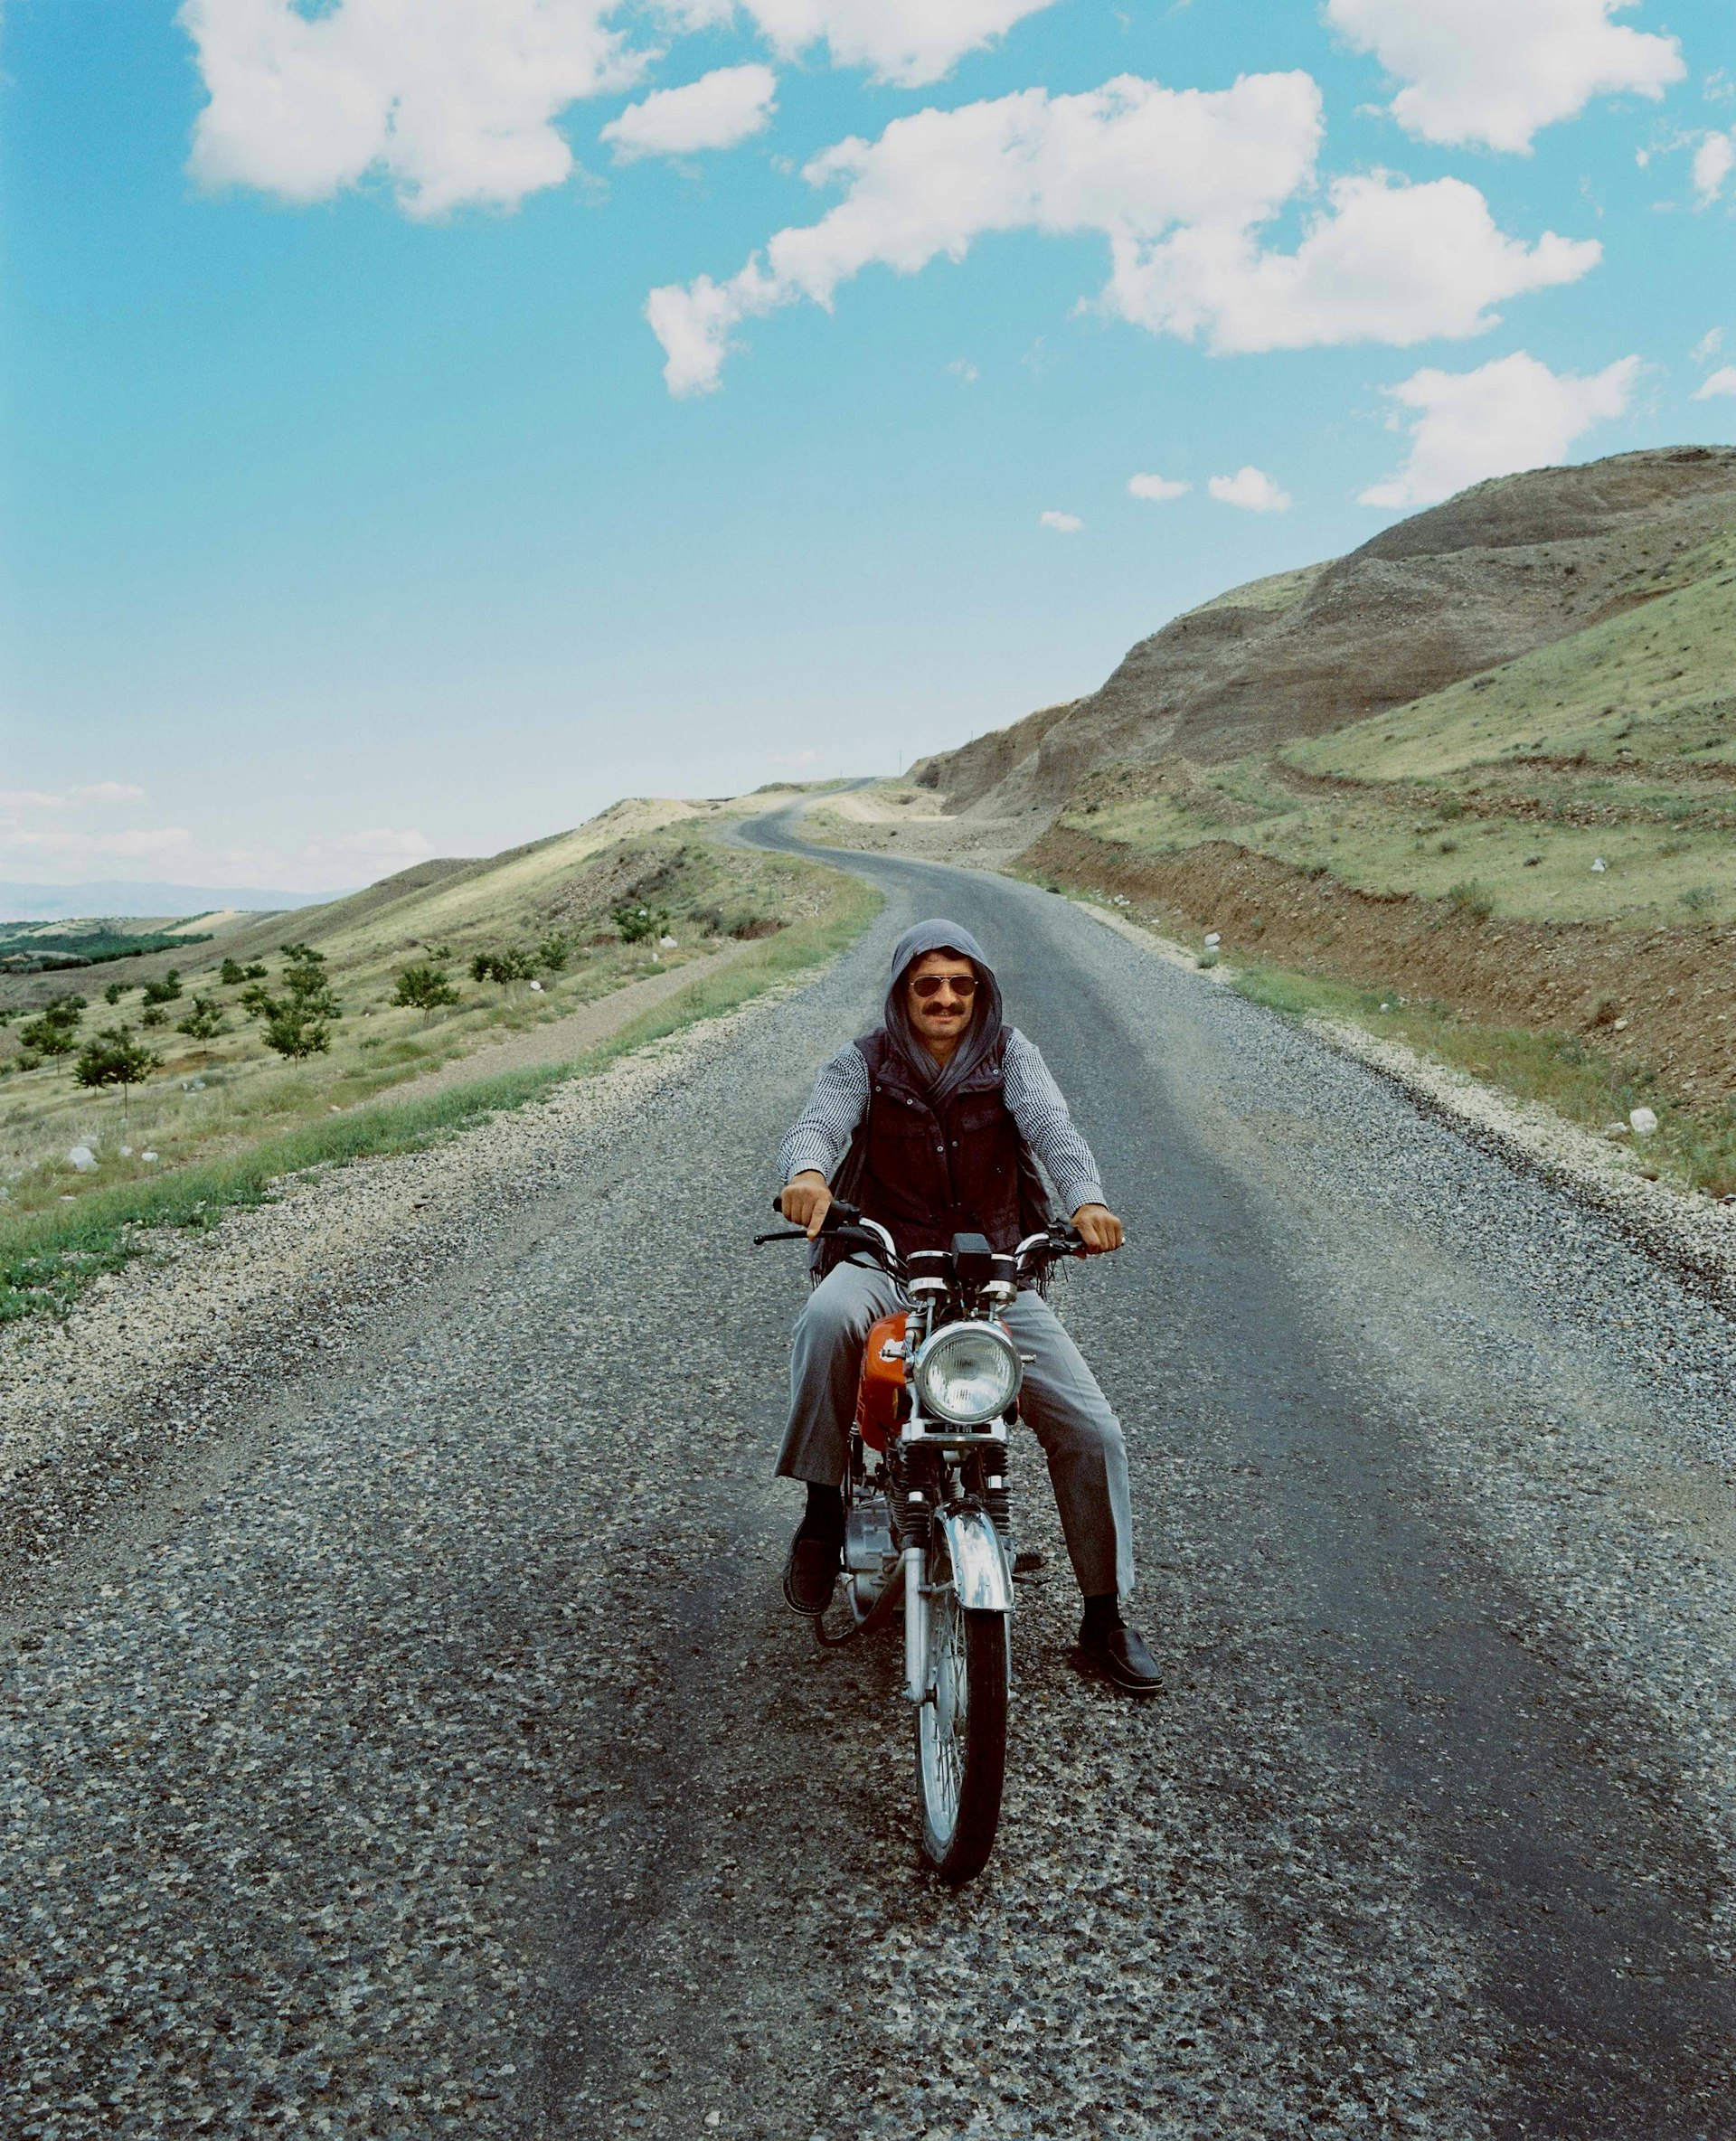 A man pauses on his motorbike near the Keban dam on the Euphrates River, Anatolia.